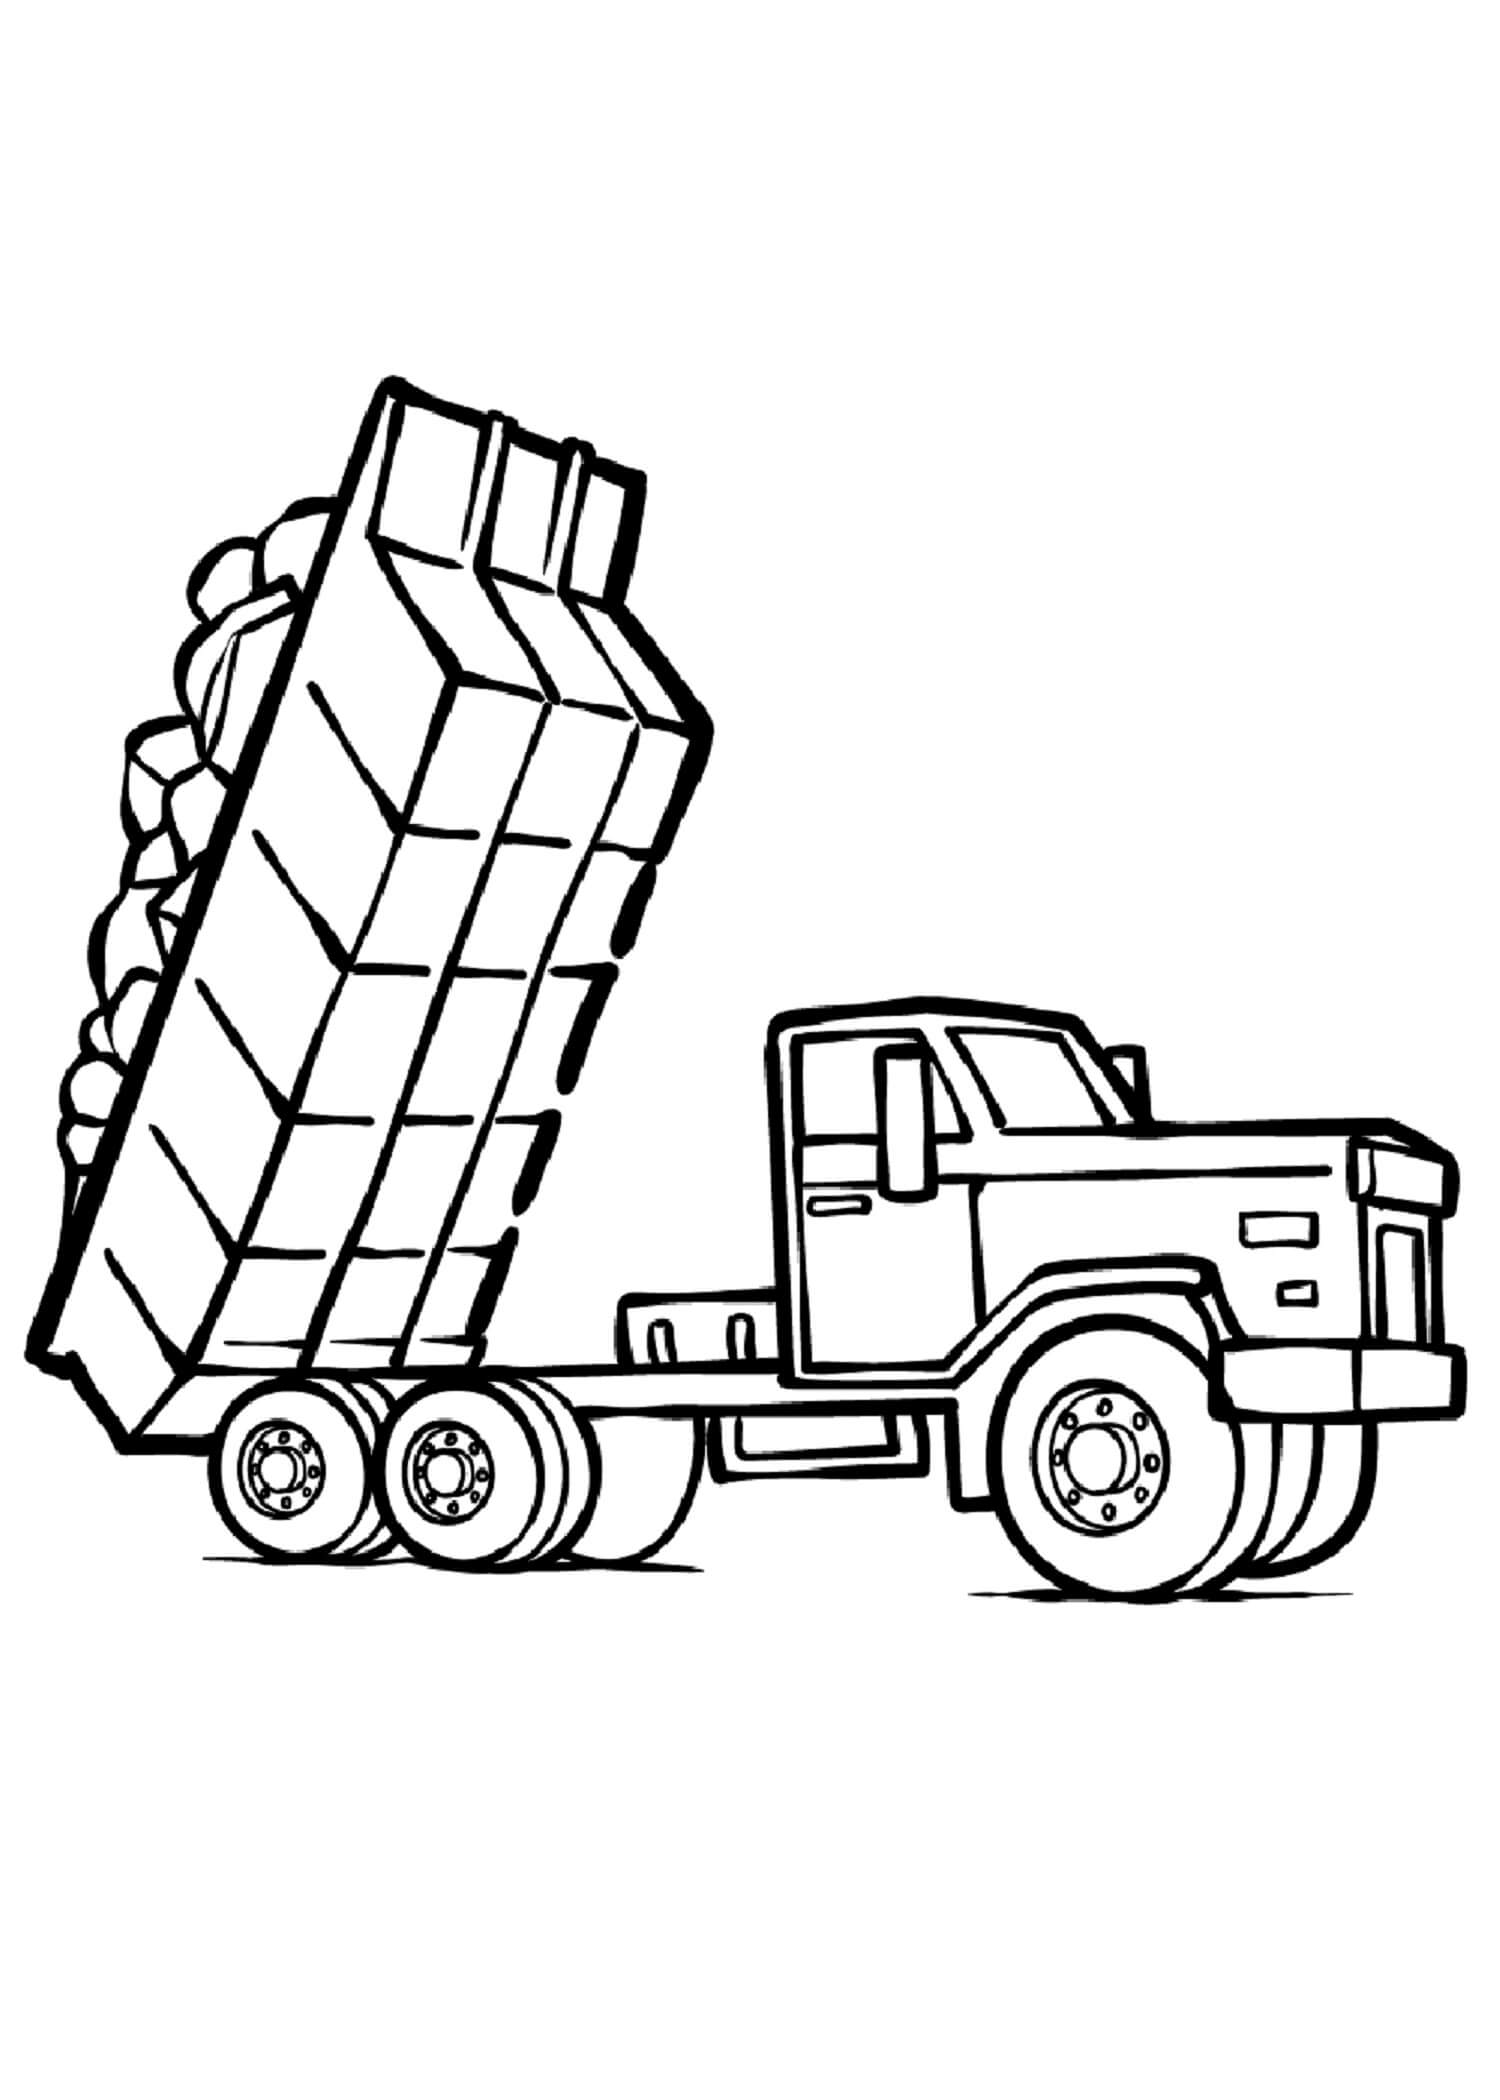 Sketch Dump Truck Vector & Photo (Free Trial) | Bigstock